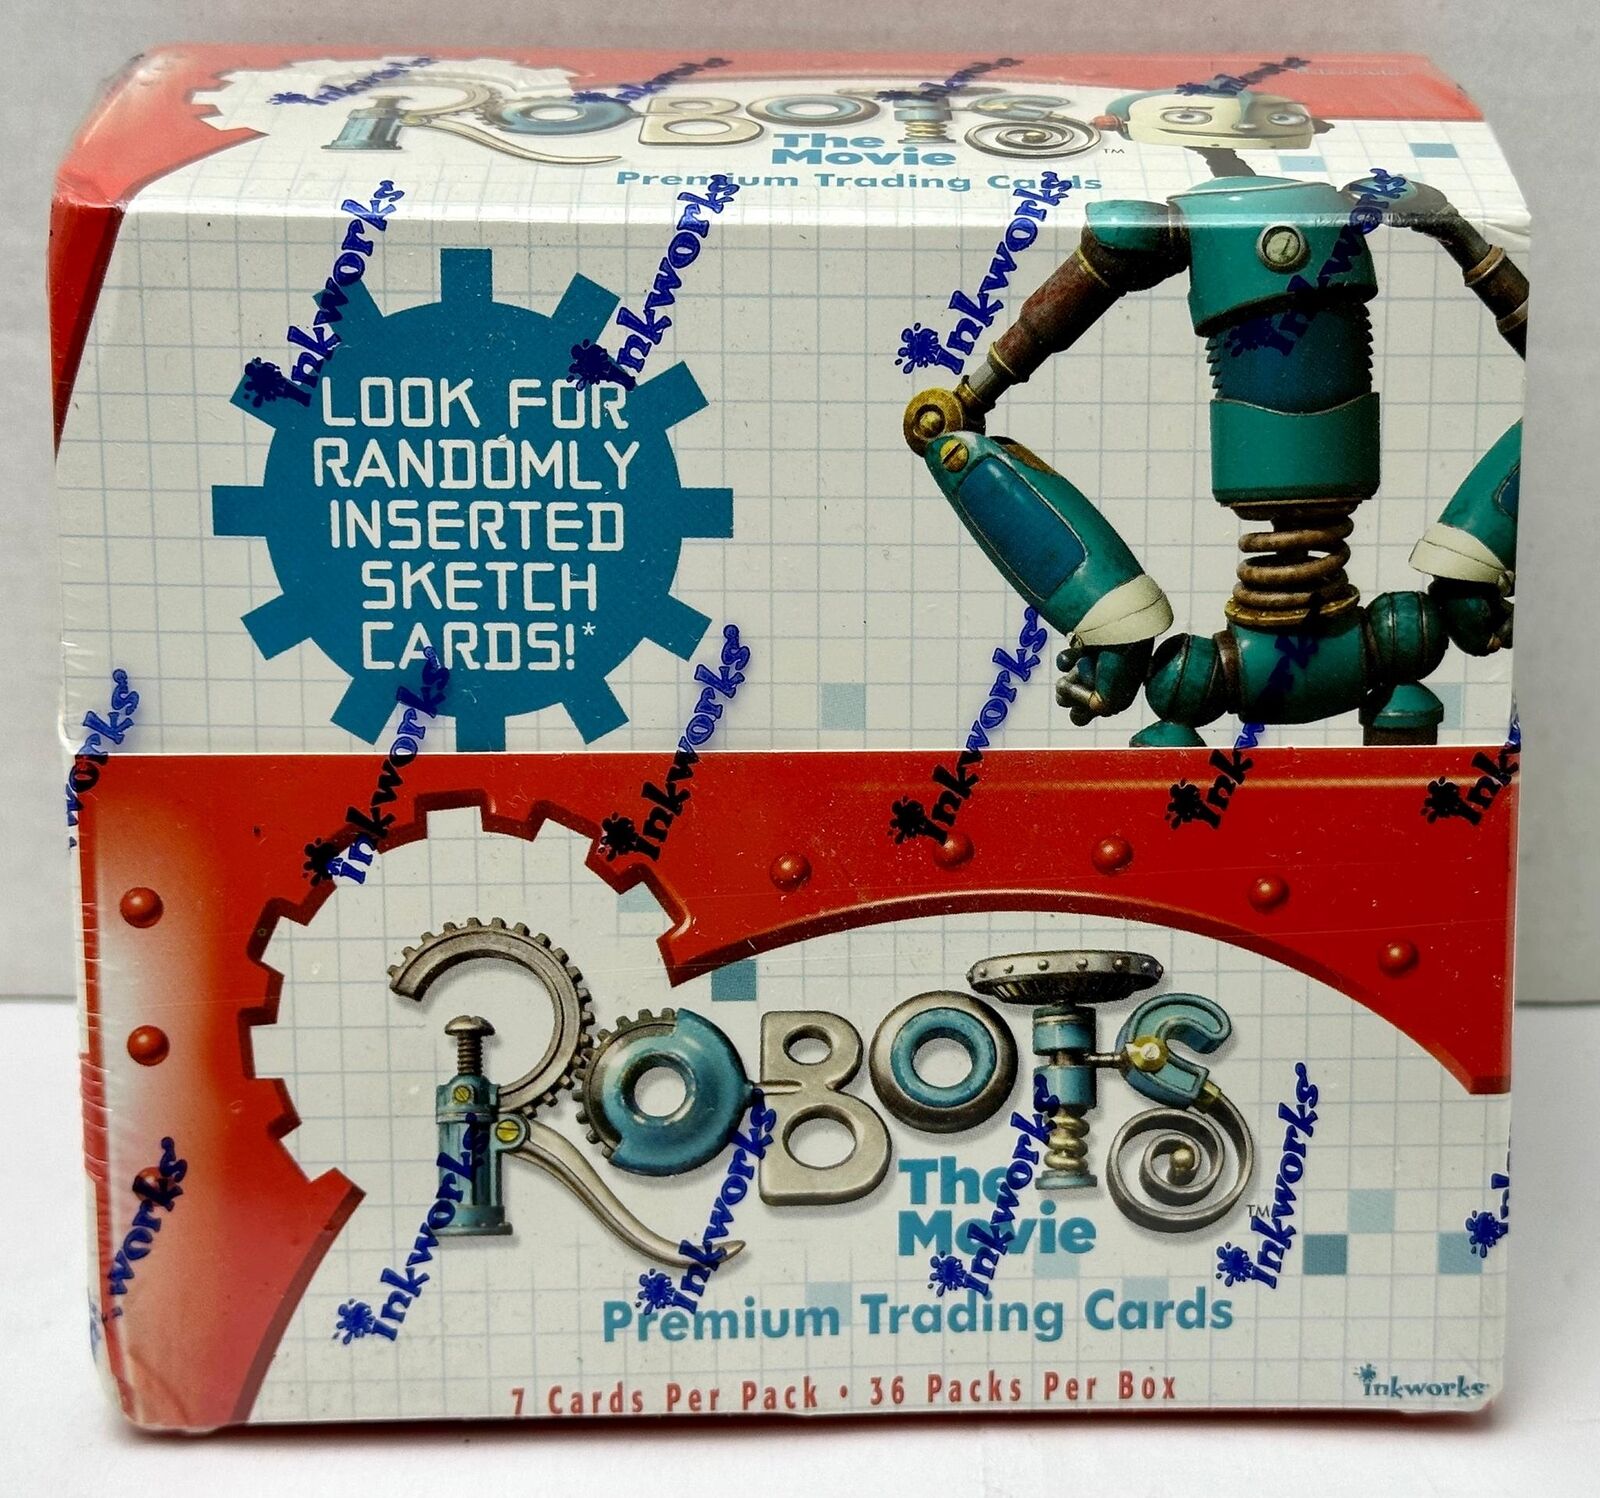 Robots The Movie Hobby Trading Card Box 36 Packs Inkworks 2006 Factory Sealed